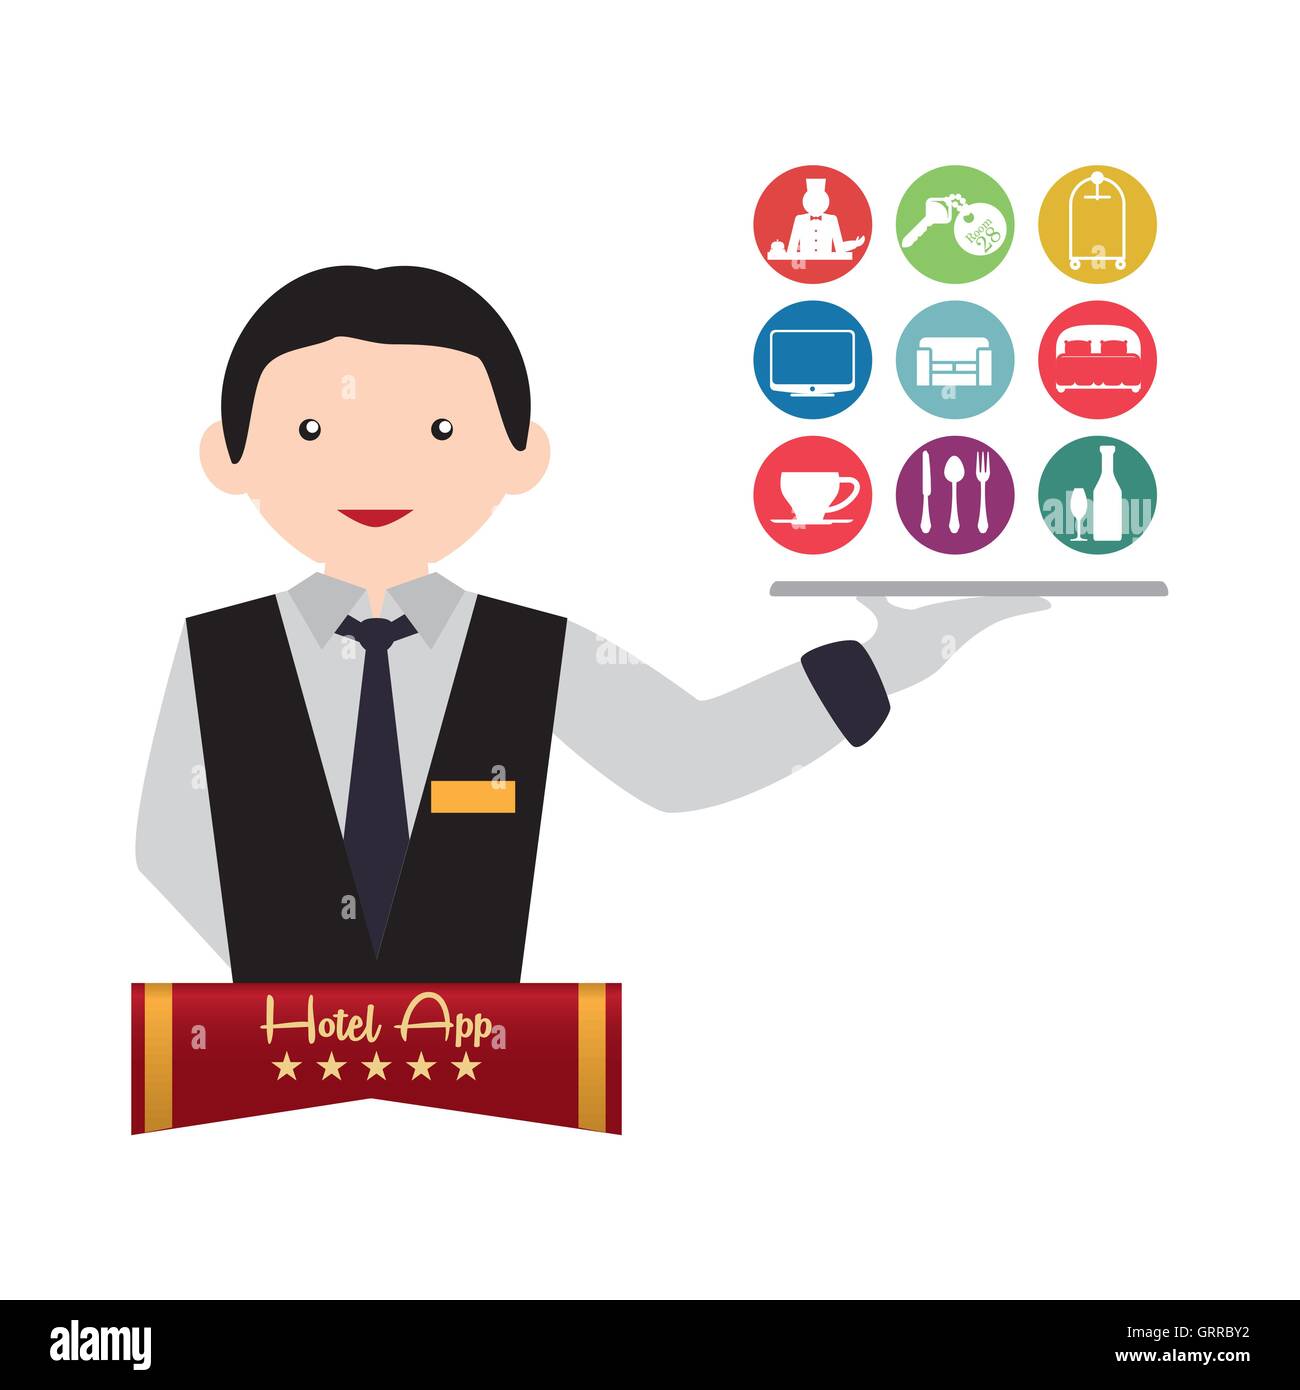 Waiter Of Hotel And Digital Apps Design Stock Vector Art